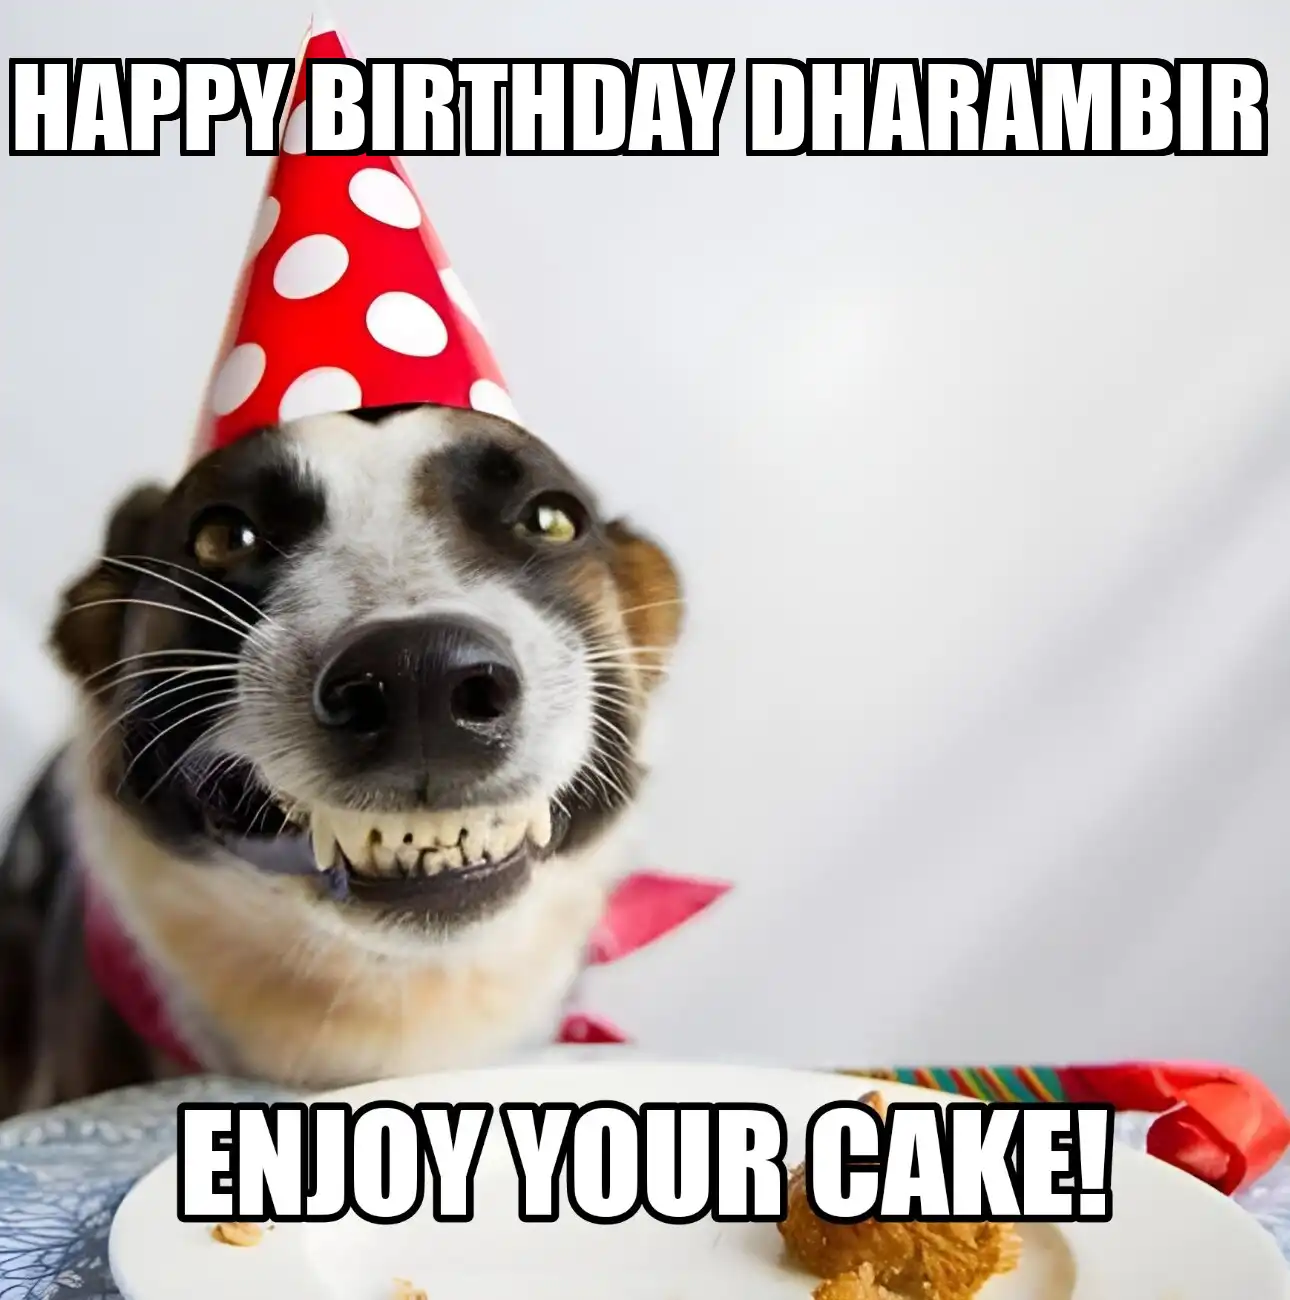 Happy Birthday Dharambir Enjoy Your Cake Dog Meme